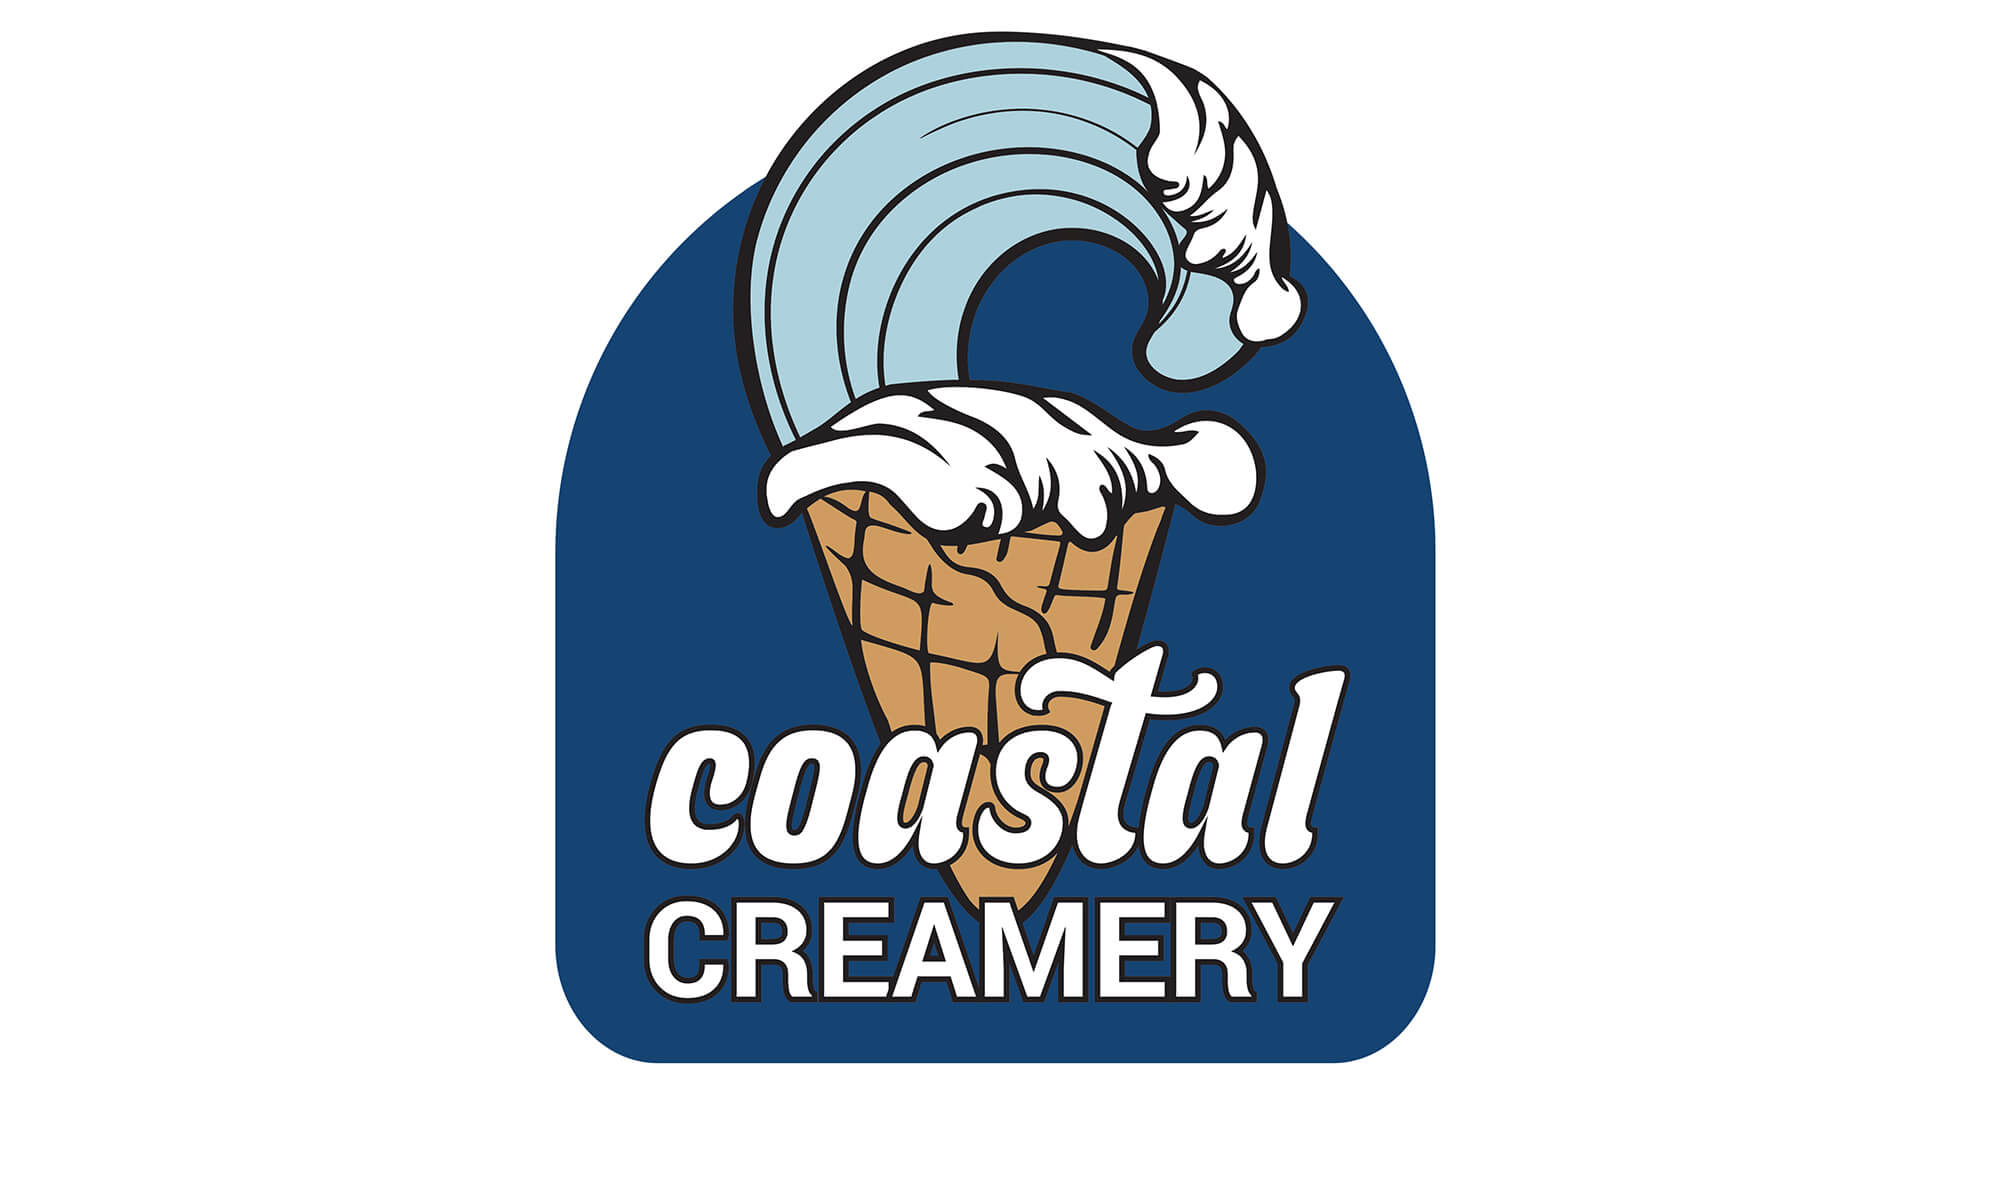 Coastal Creamery Outdoor Sign